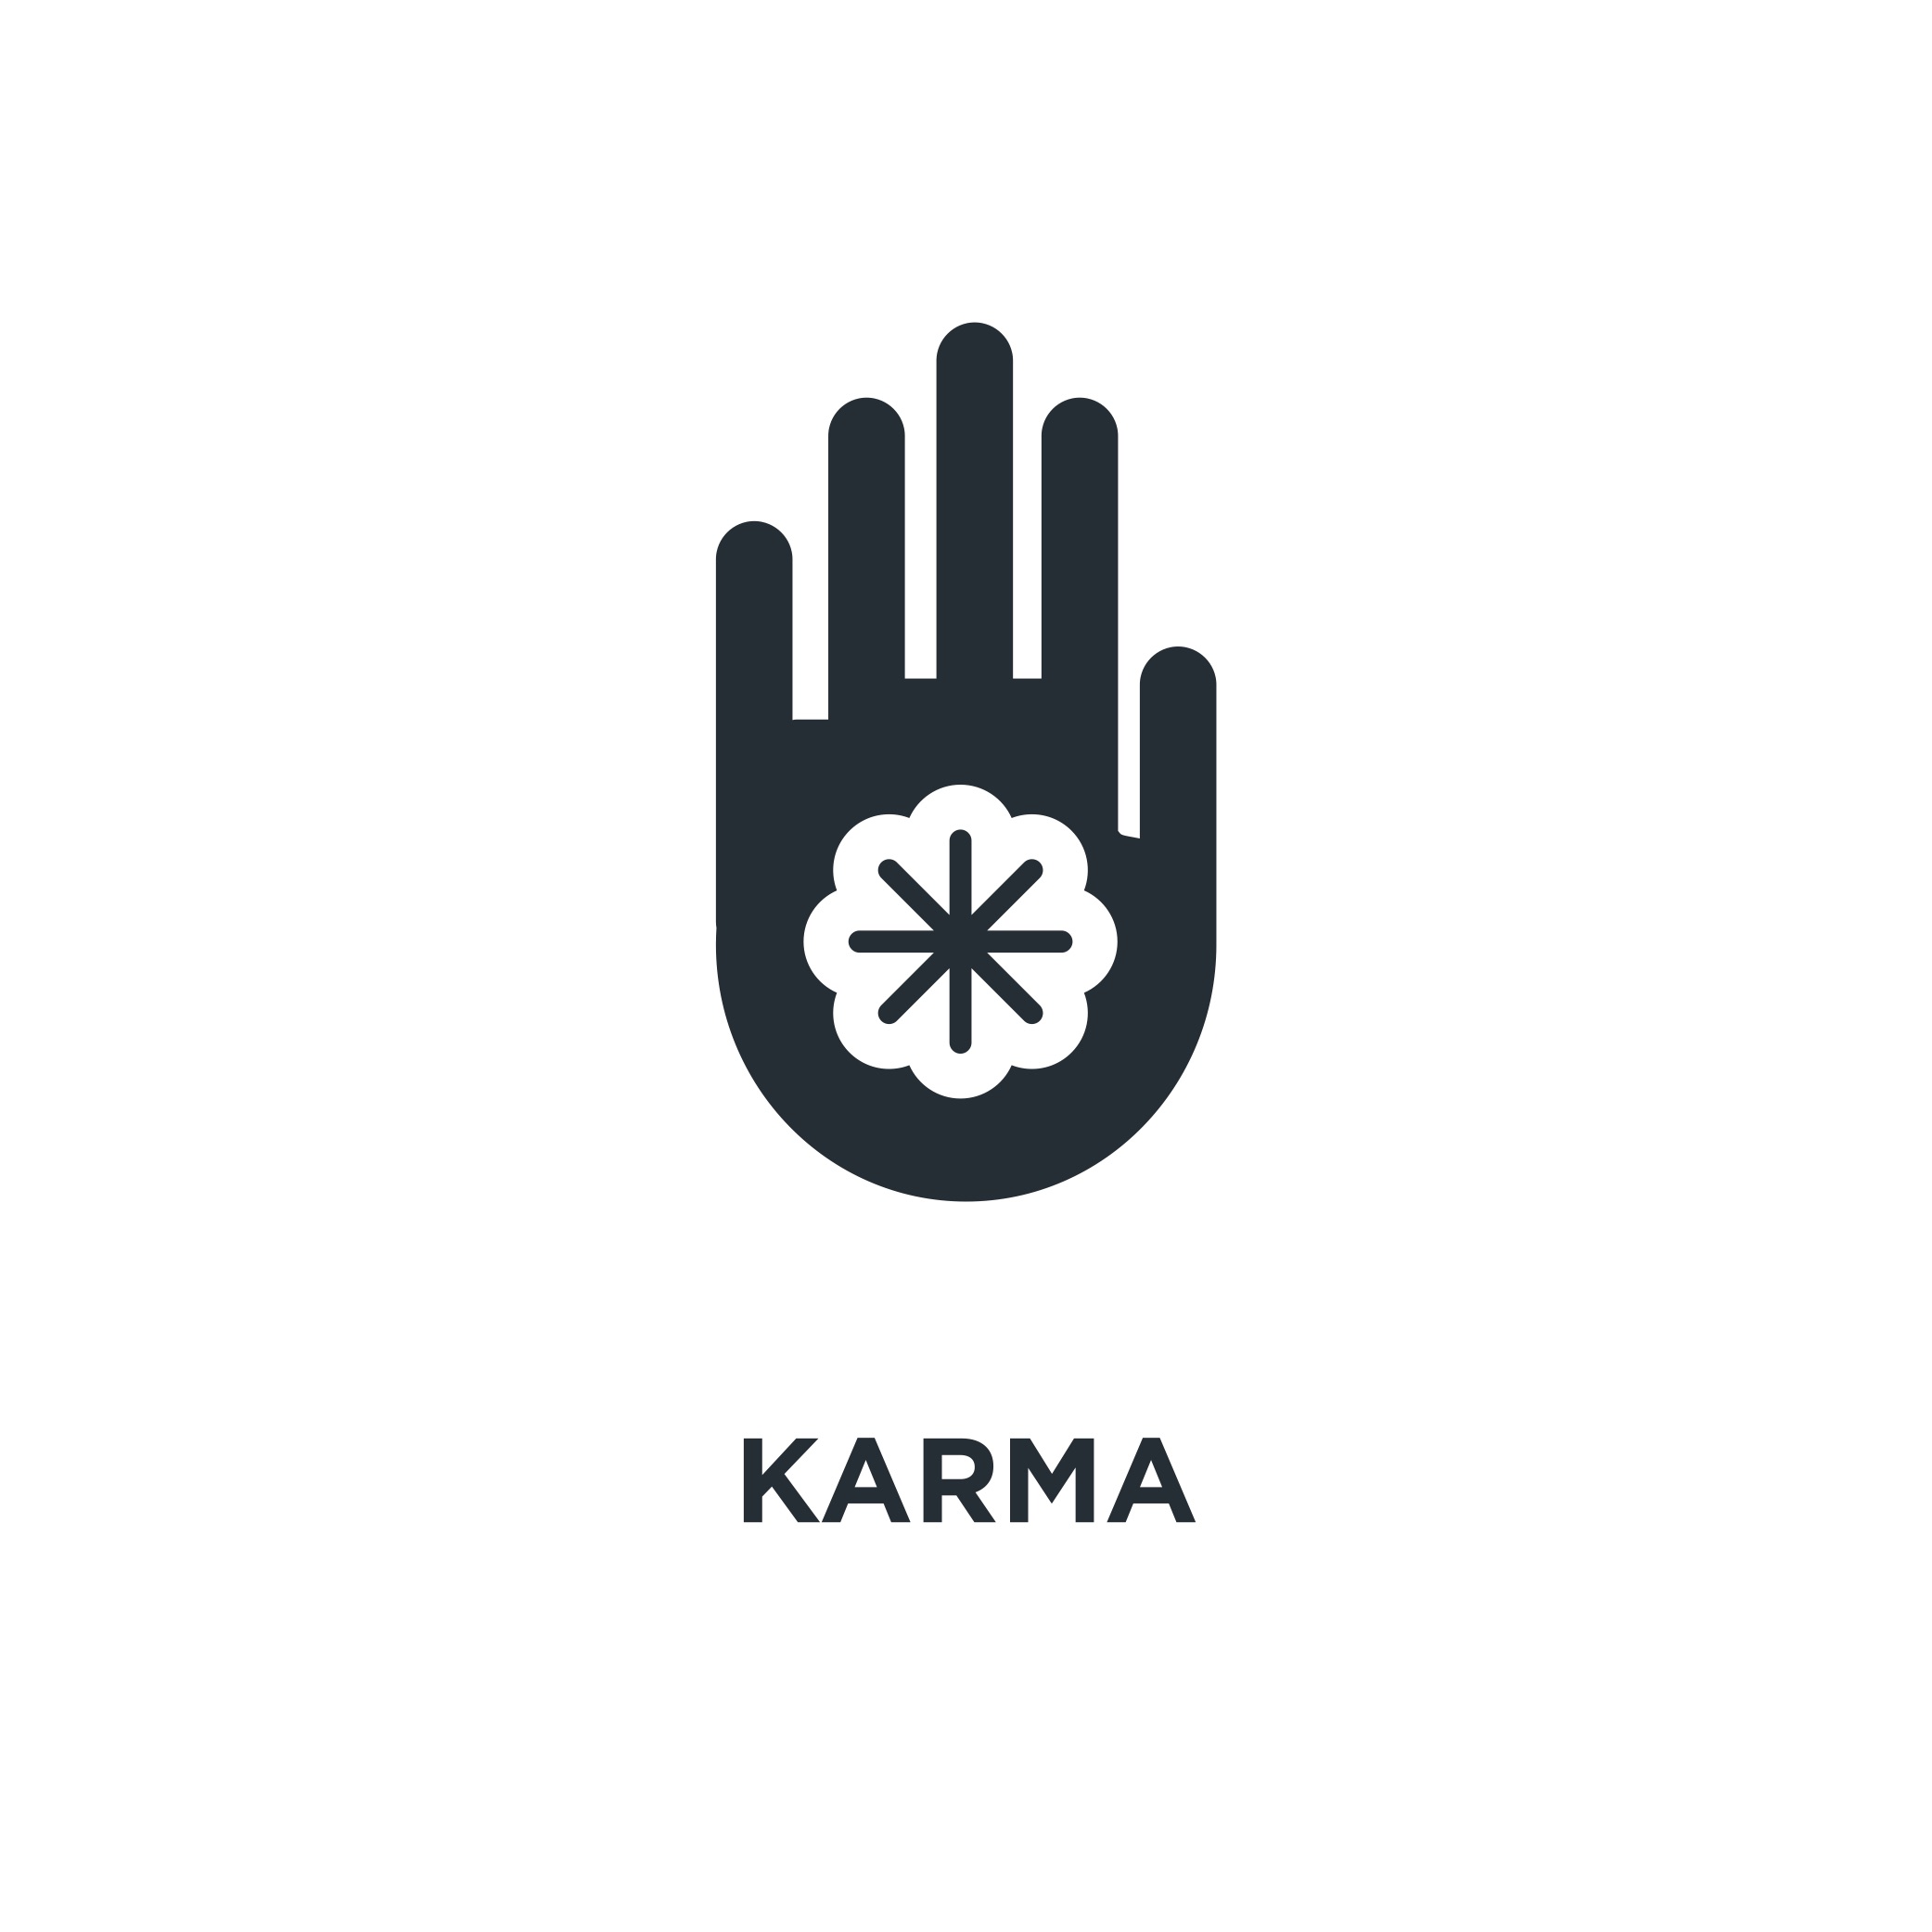 A karma logo. | Source: Shutterstock